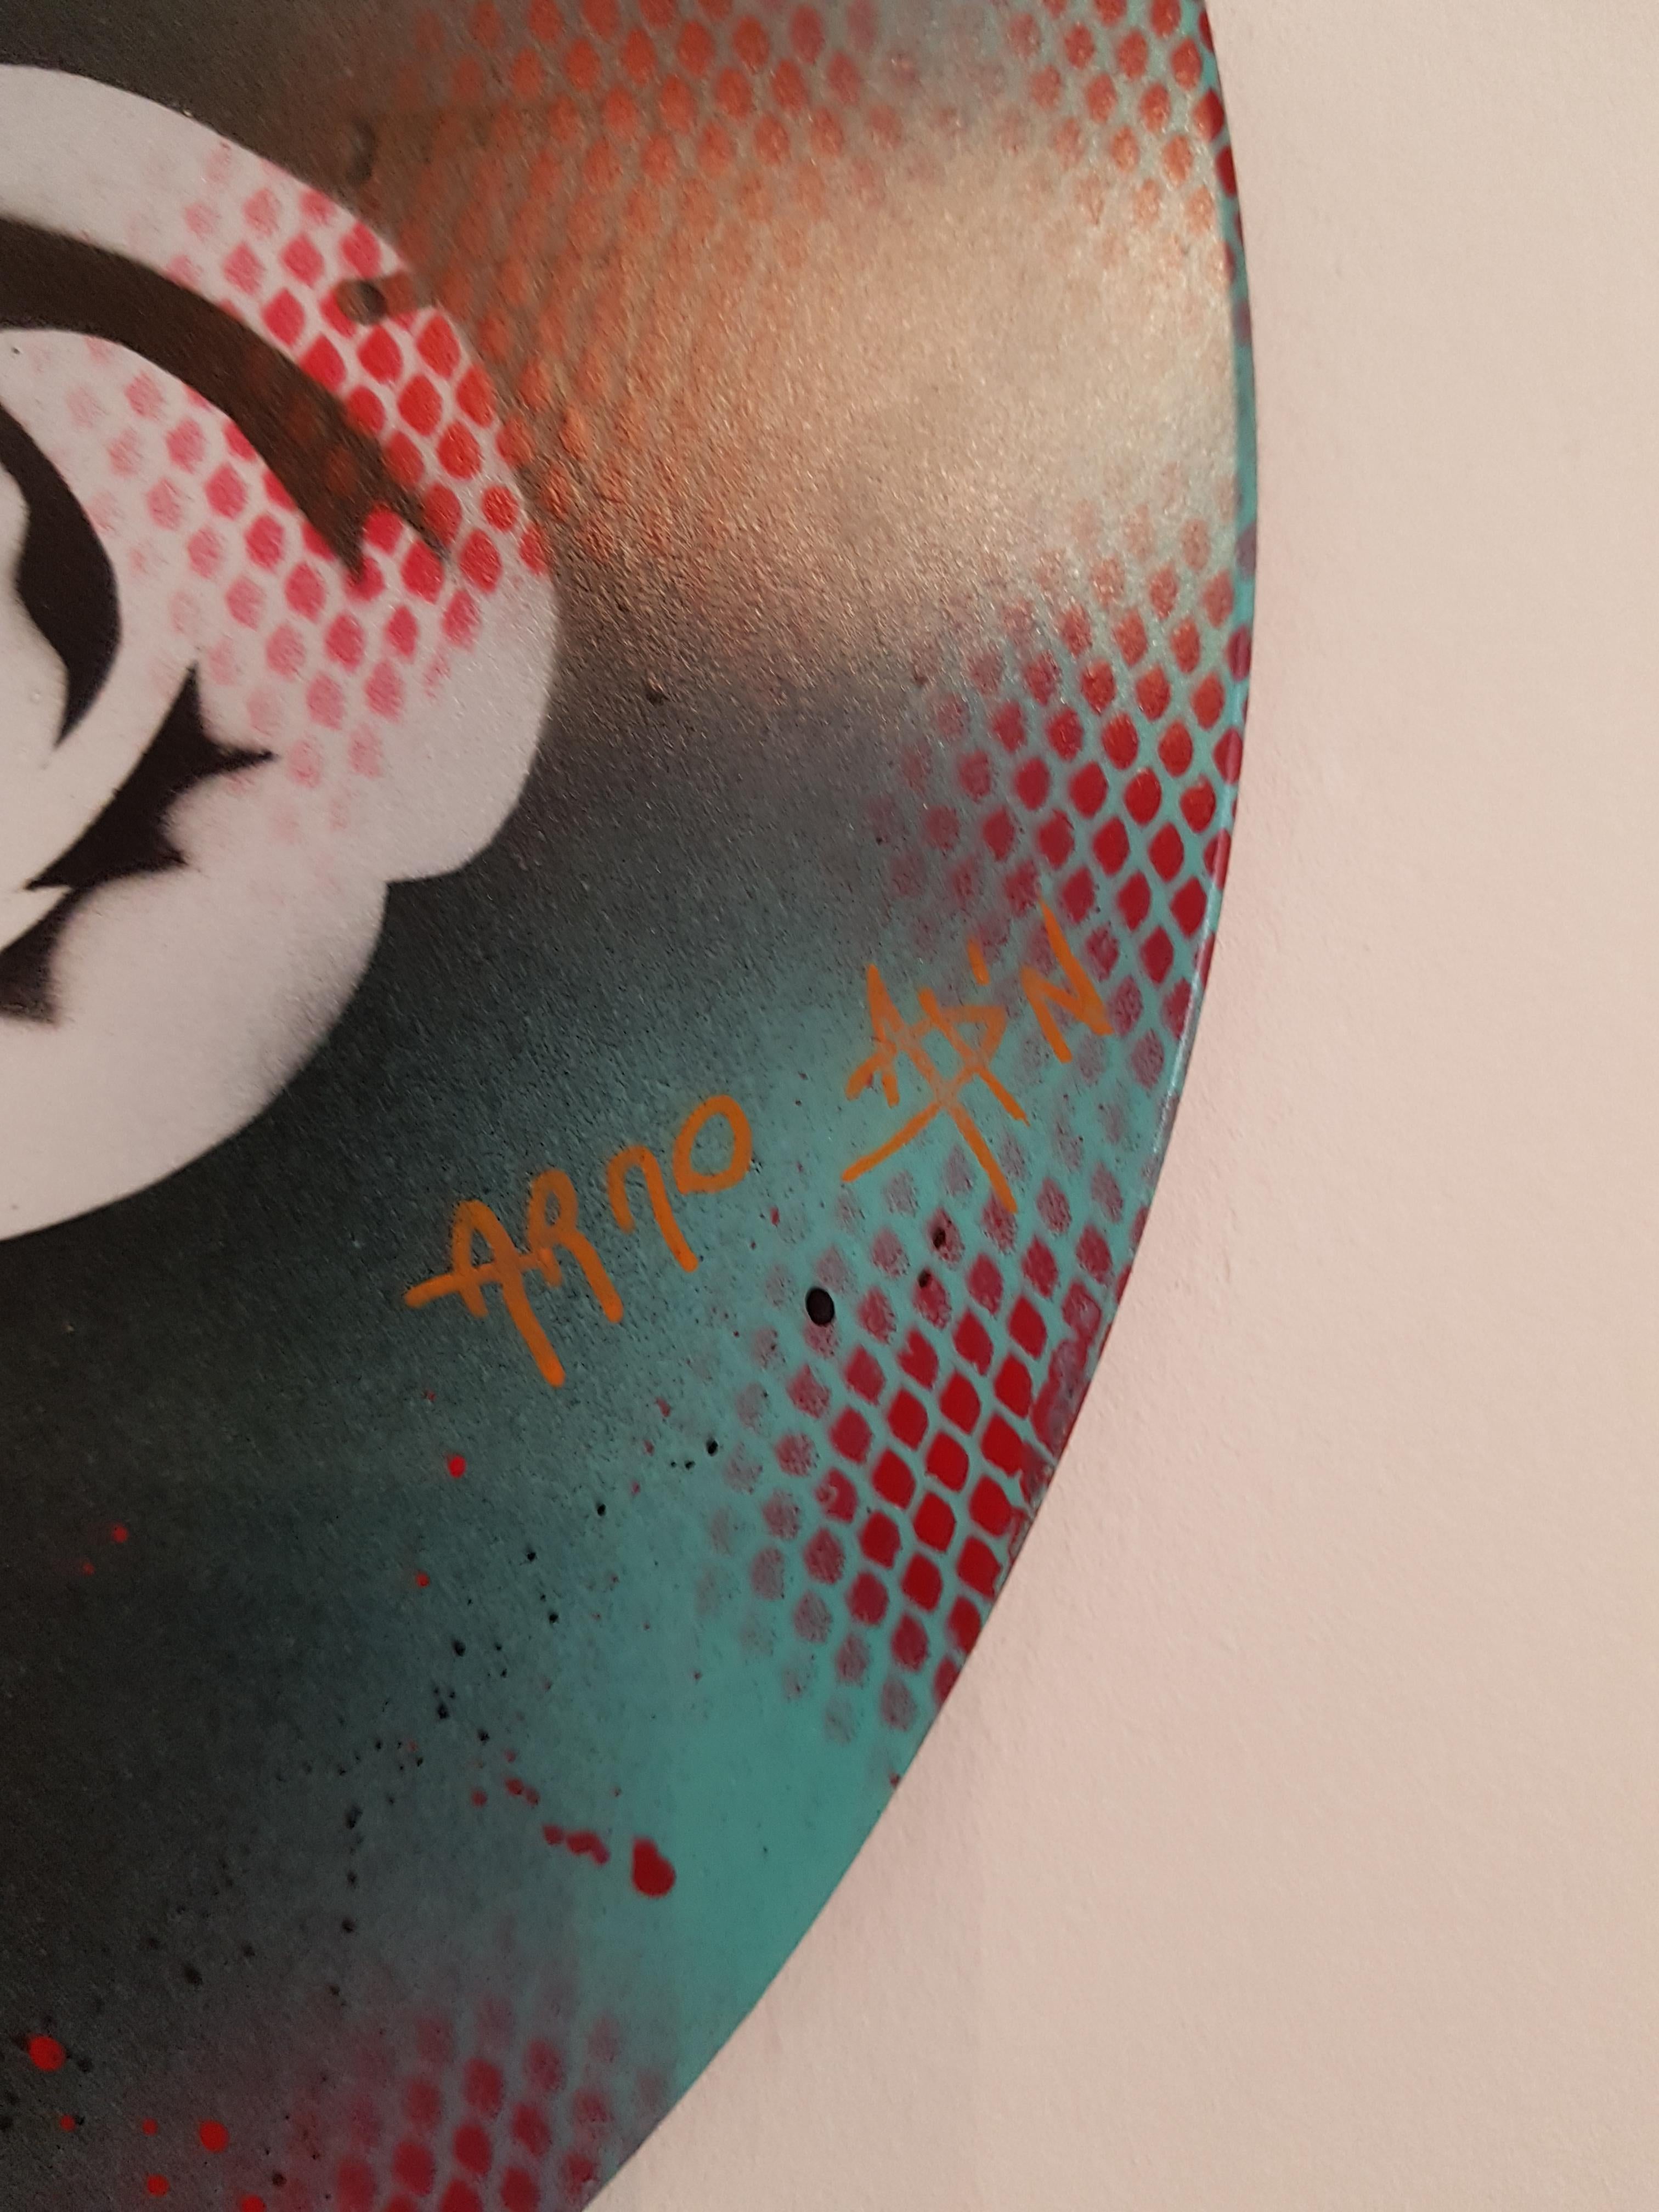 Fuck Reason
2018
Mixed media: stencil, aerosol spray, Posca
Support: 33 rpm vinyl
Diameter: 30 cm
Signed artwork, with certificate of the artist